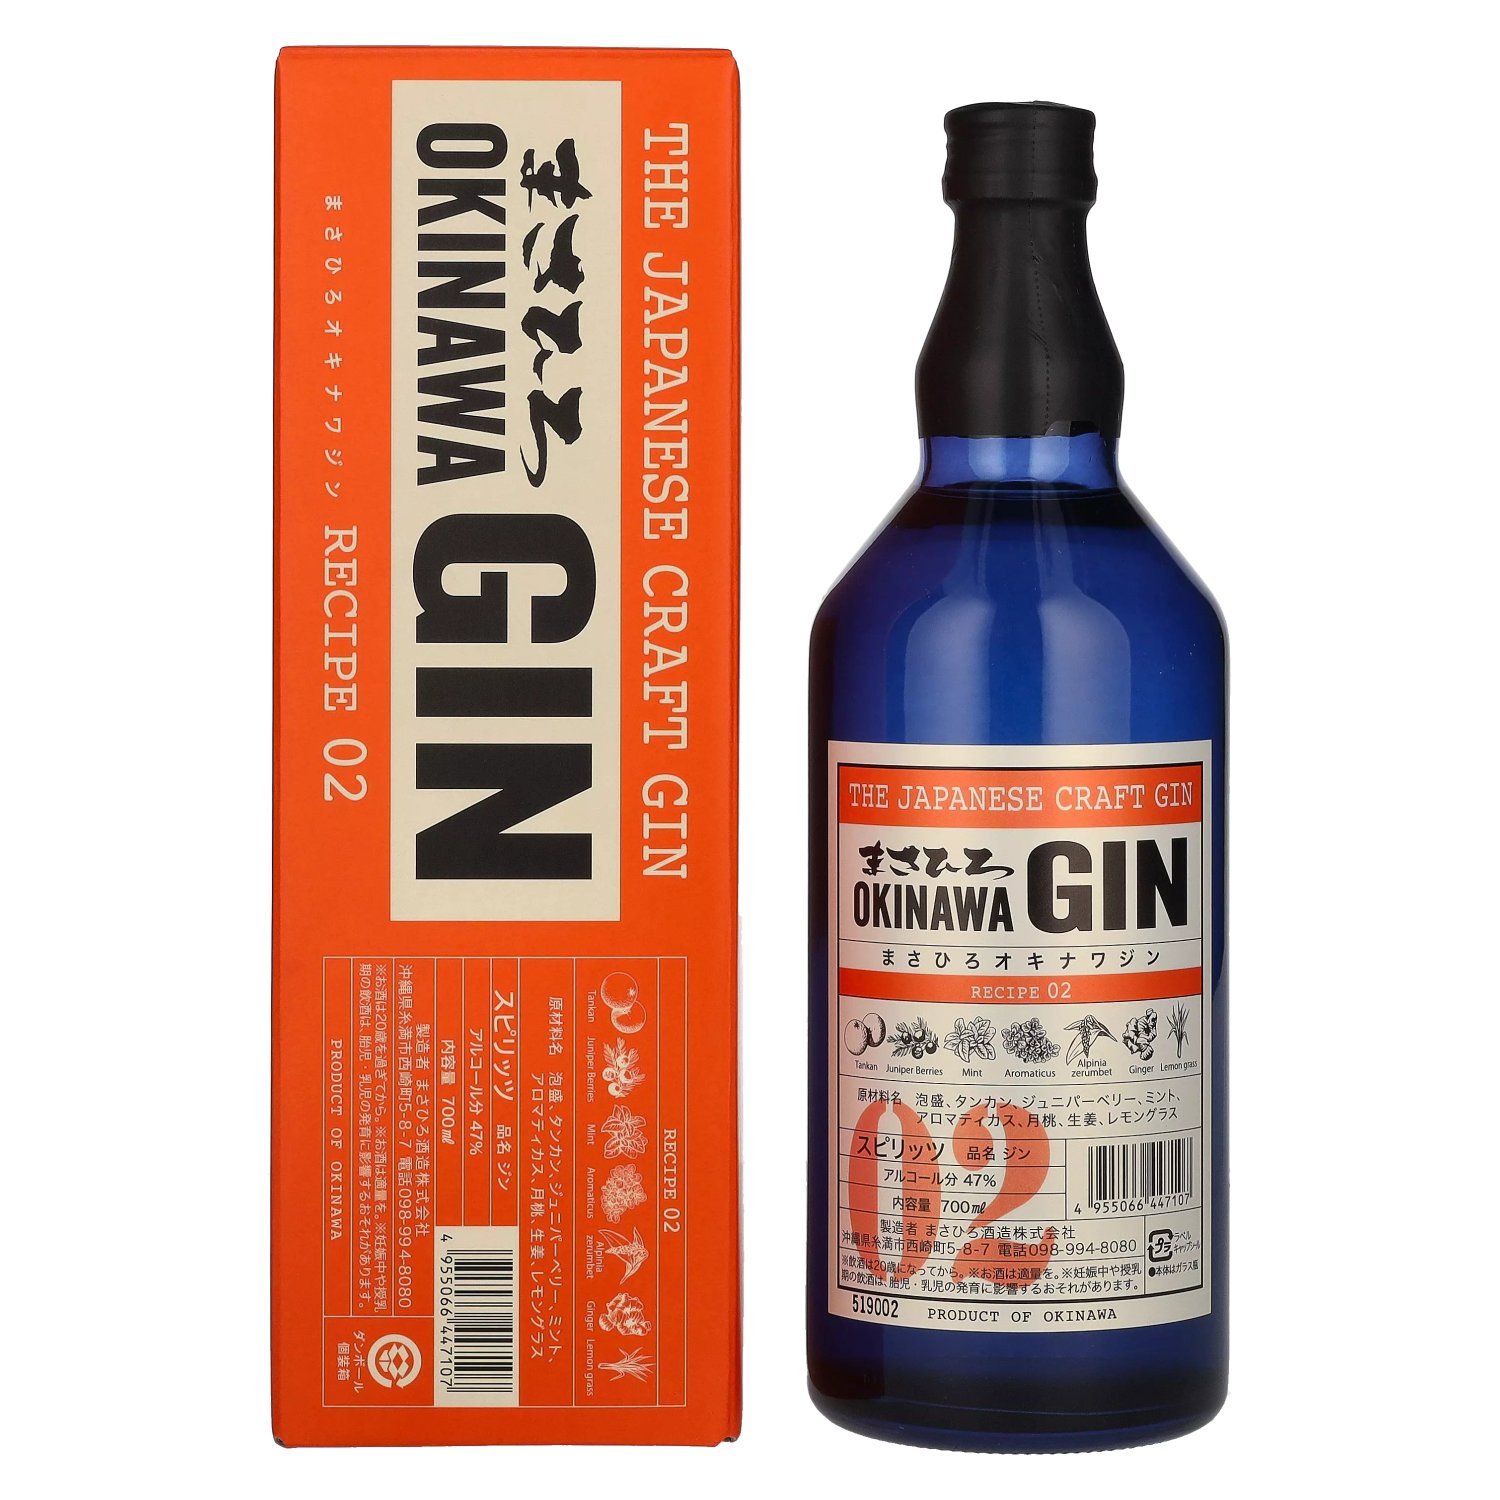 Masahiro OKINAWA Gin The Japanese Craft Gin Recipe 02 Vol. 0,7l in Giftbox